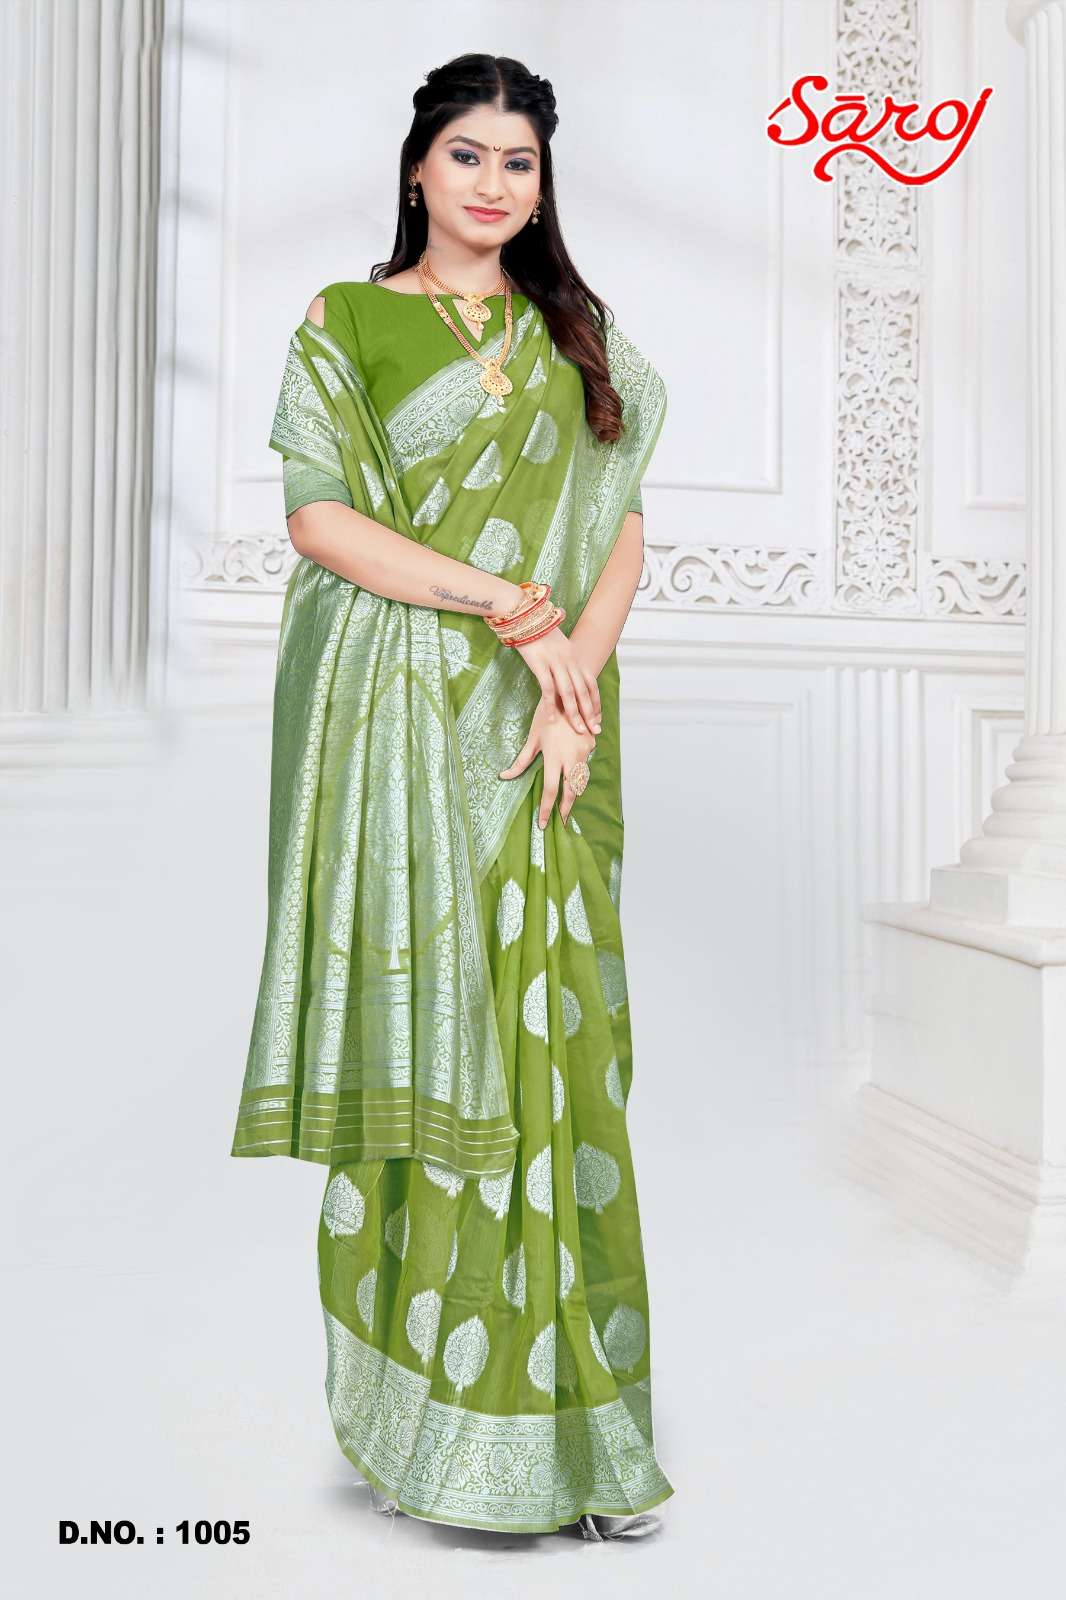 Saroj textile presents Madhuvanti vol-2 Cotton Designer sarees catalogue